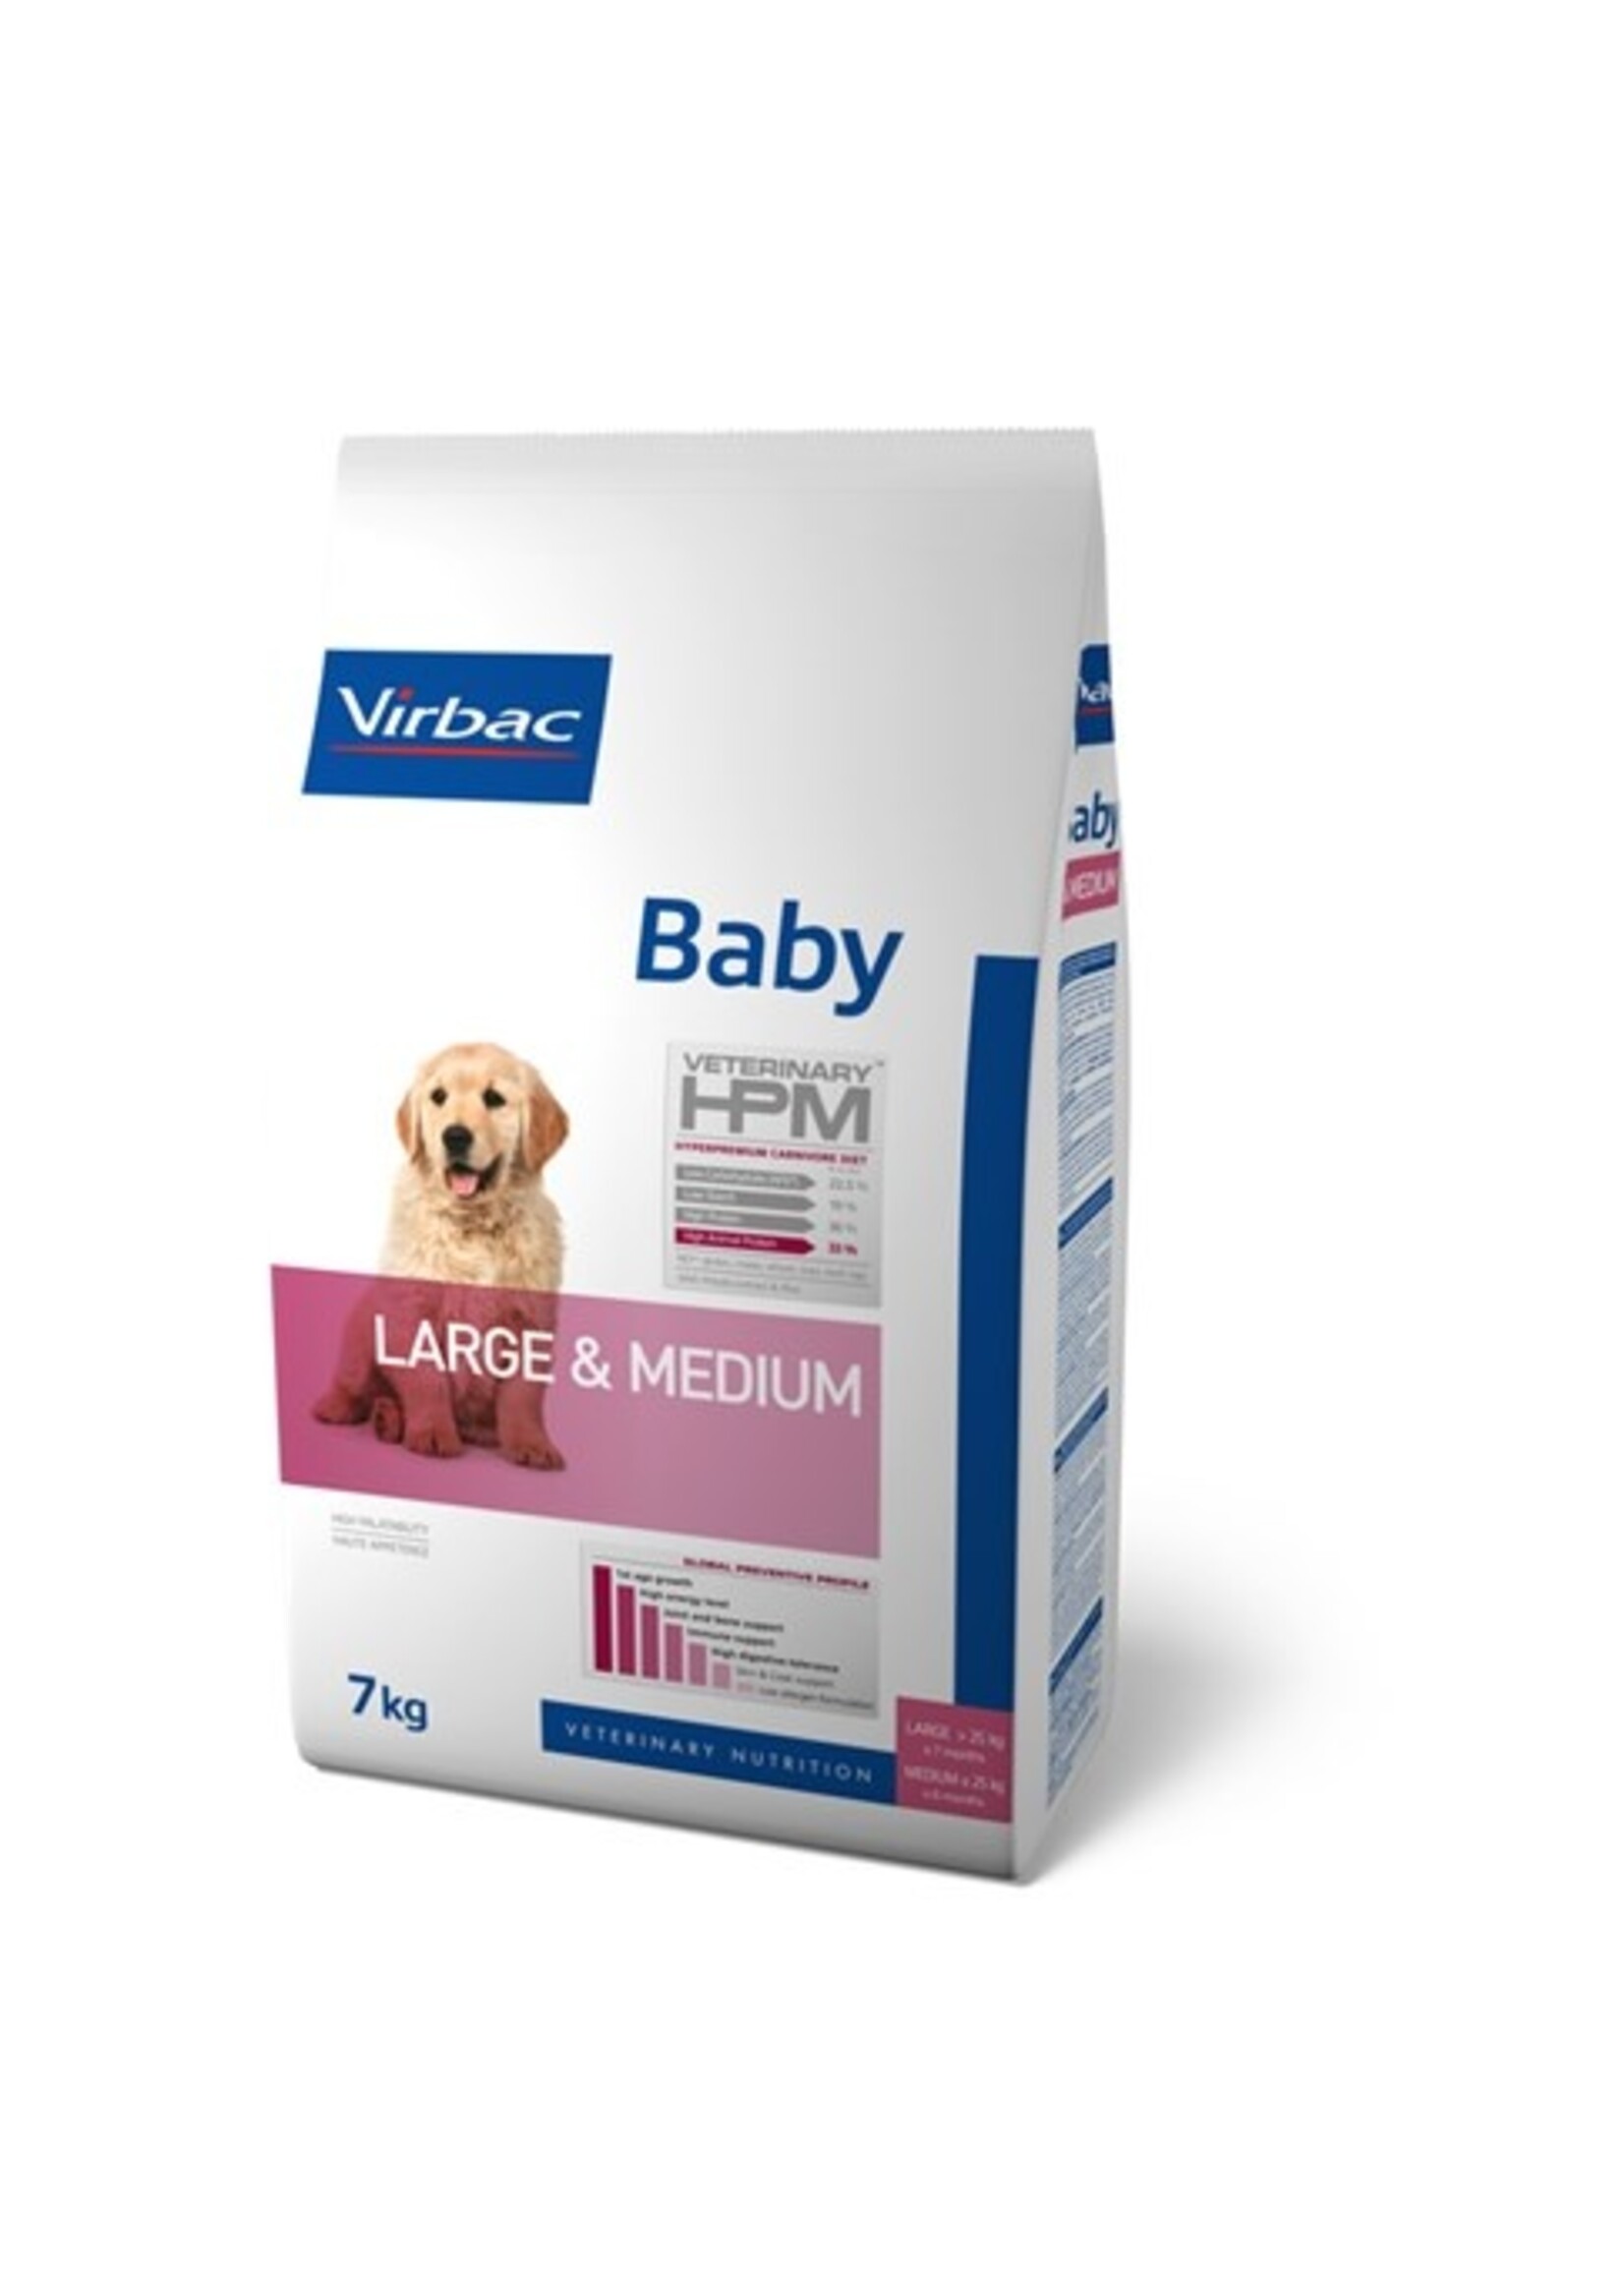 Virbac Virbac Hpm Hund Baby Large/medium Breed 7kg